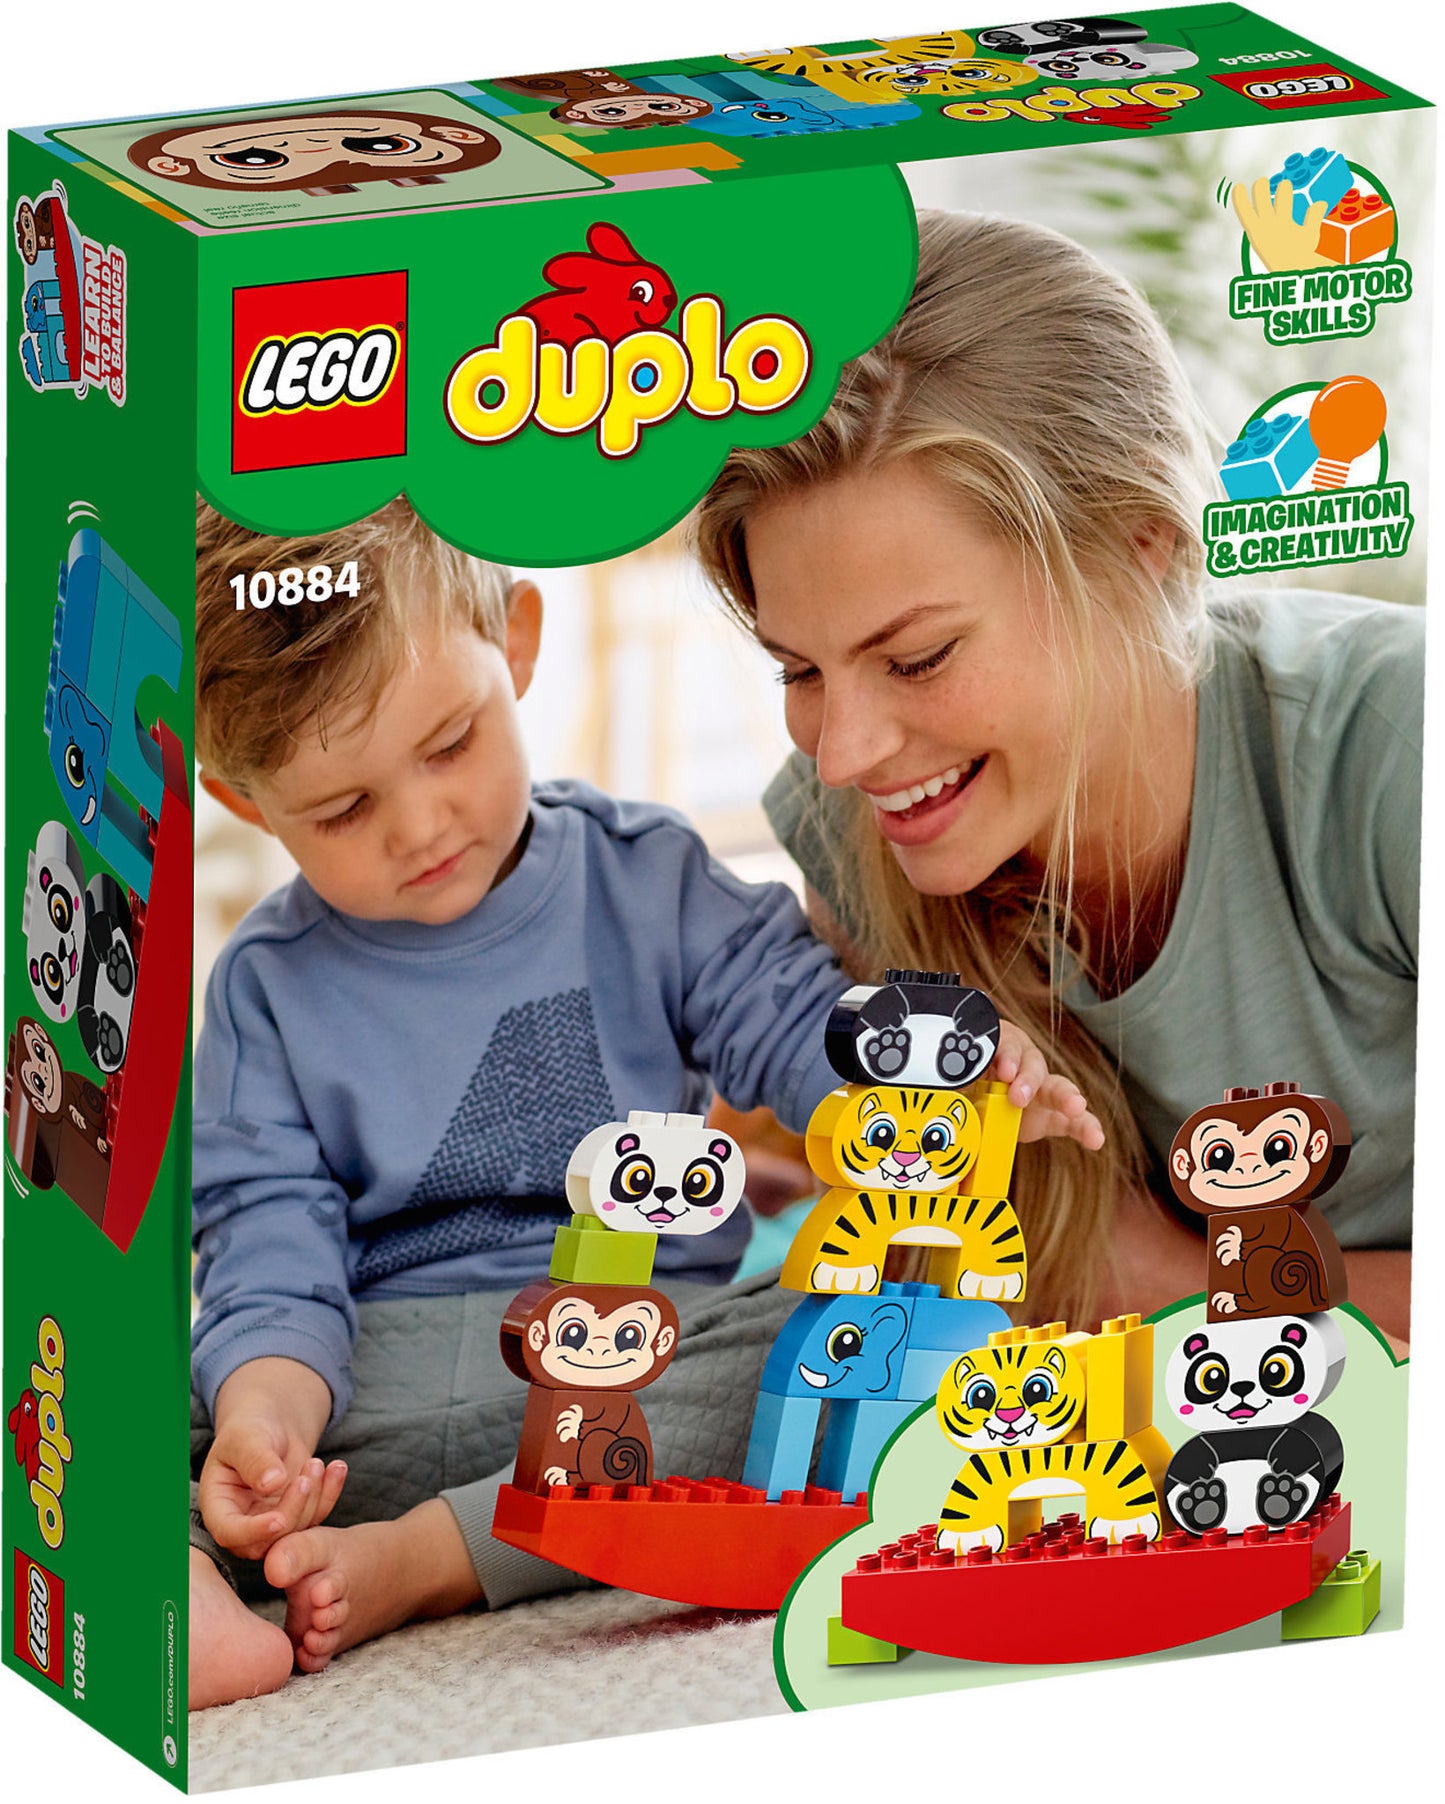 10884 LEGO Duplo - I Miei Primi Animali Equilibristi